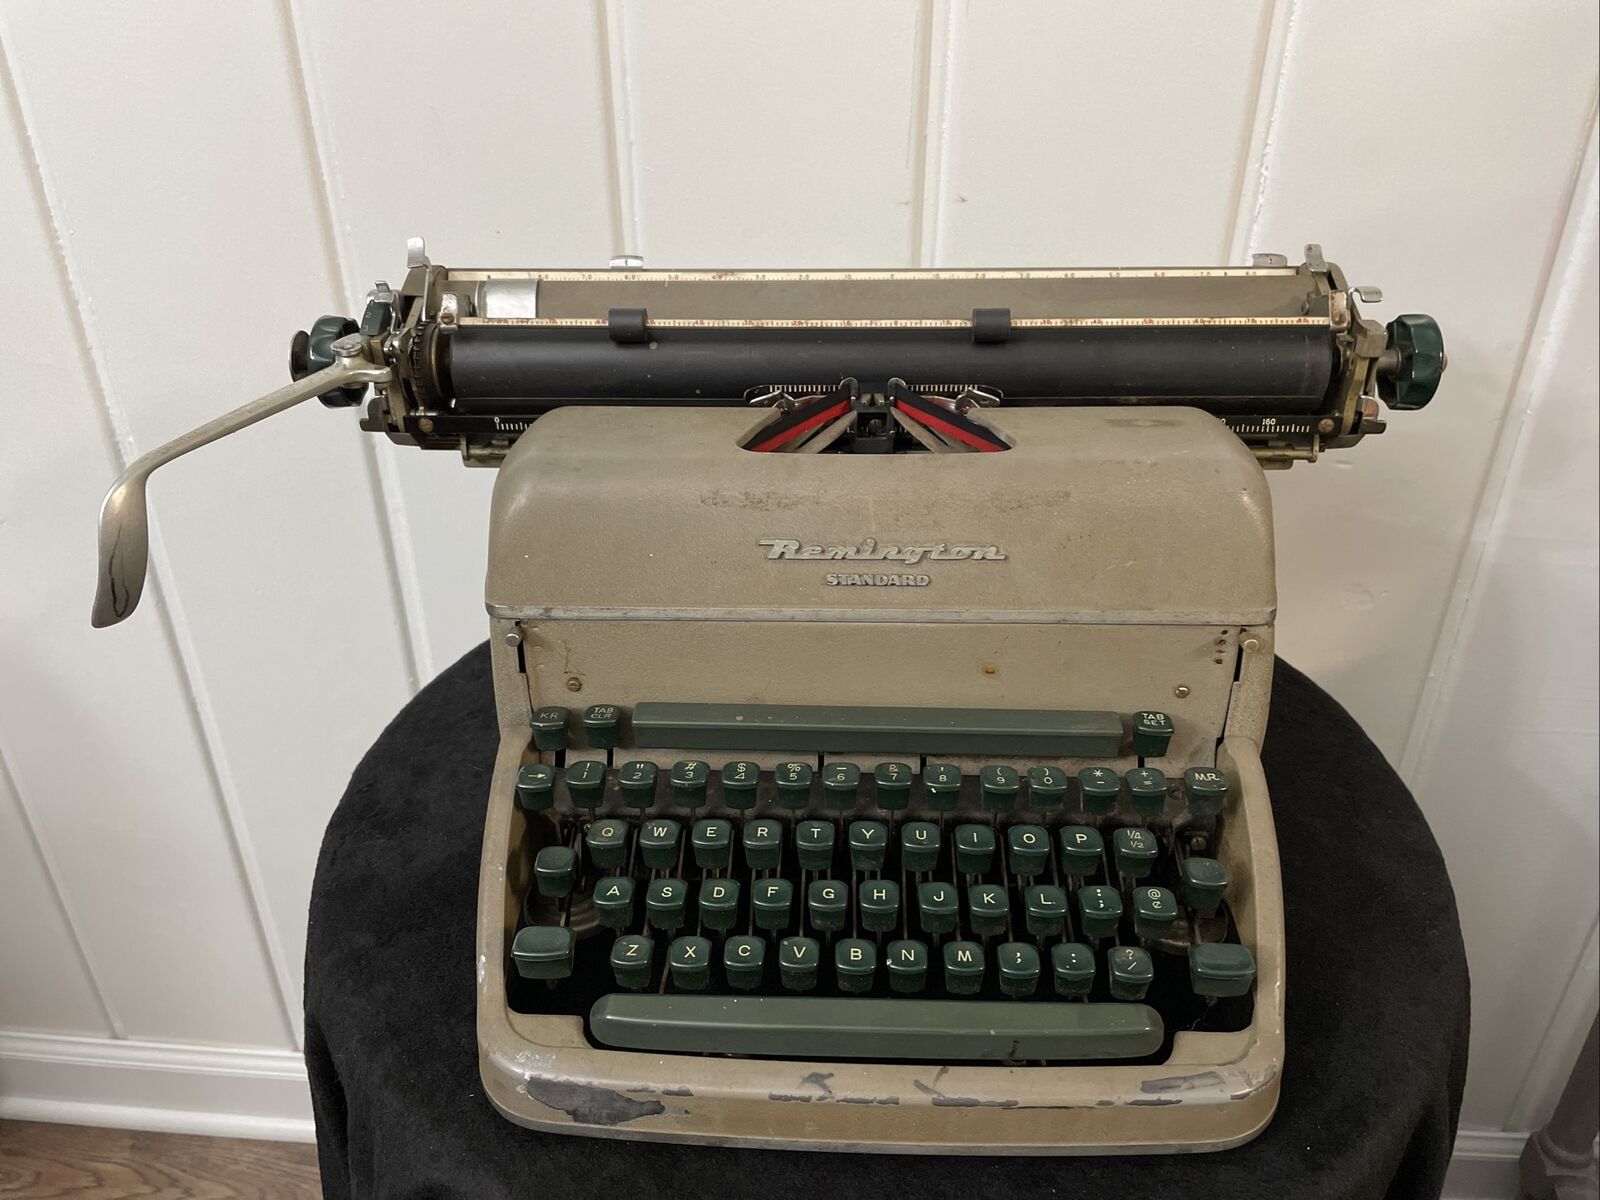 Vintage Remington Standard Working Typewriter With Extra Large Paper Holder